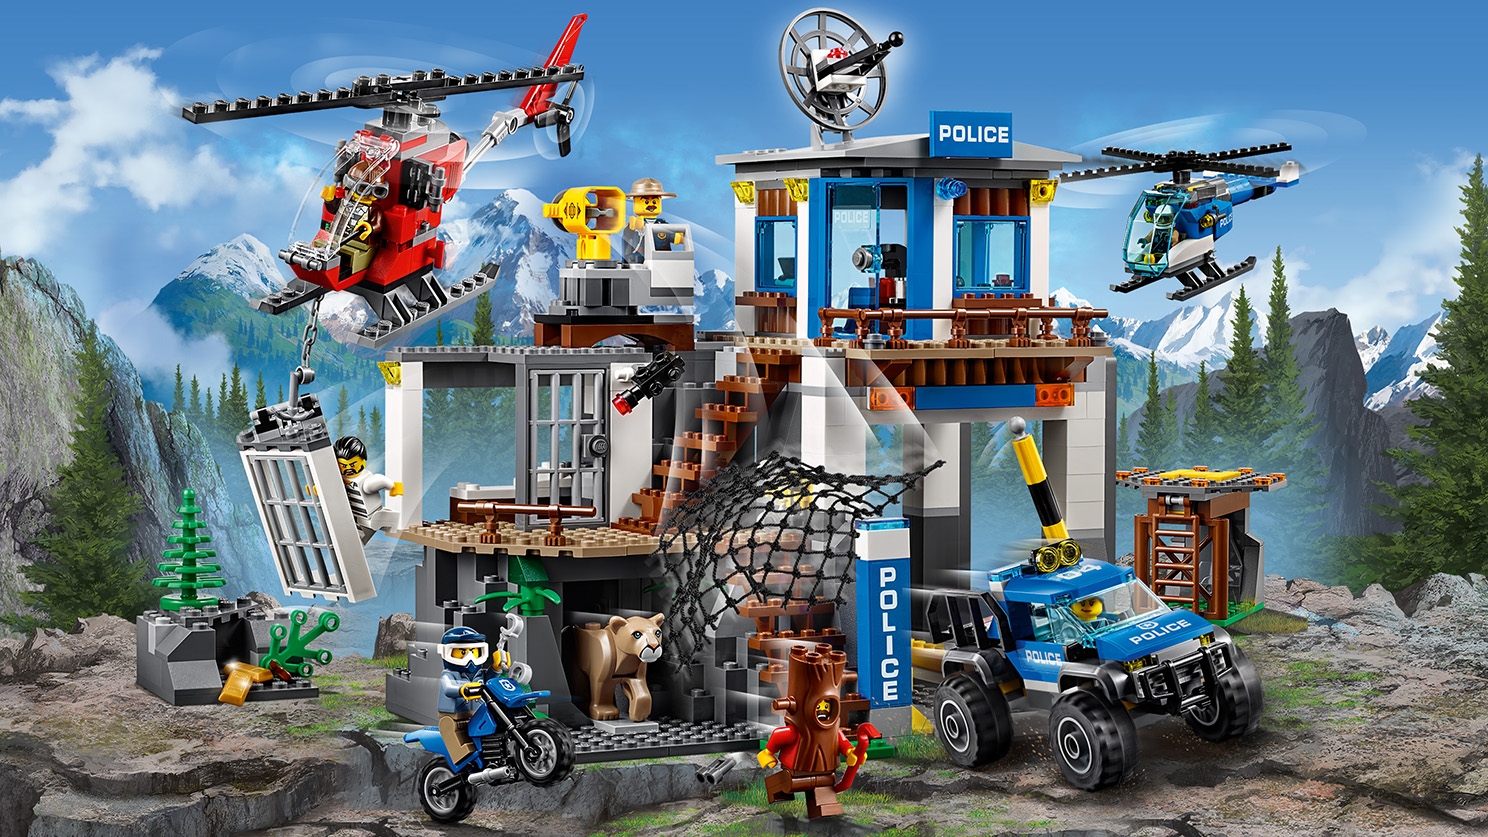 etiqueta Arturo fábrica Montaña: Estación de policía 60174 - Sets LEGO® City - LEGO.com para niños